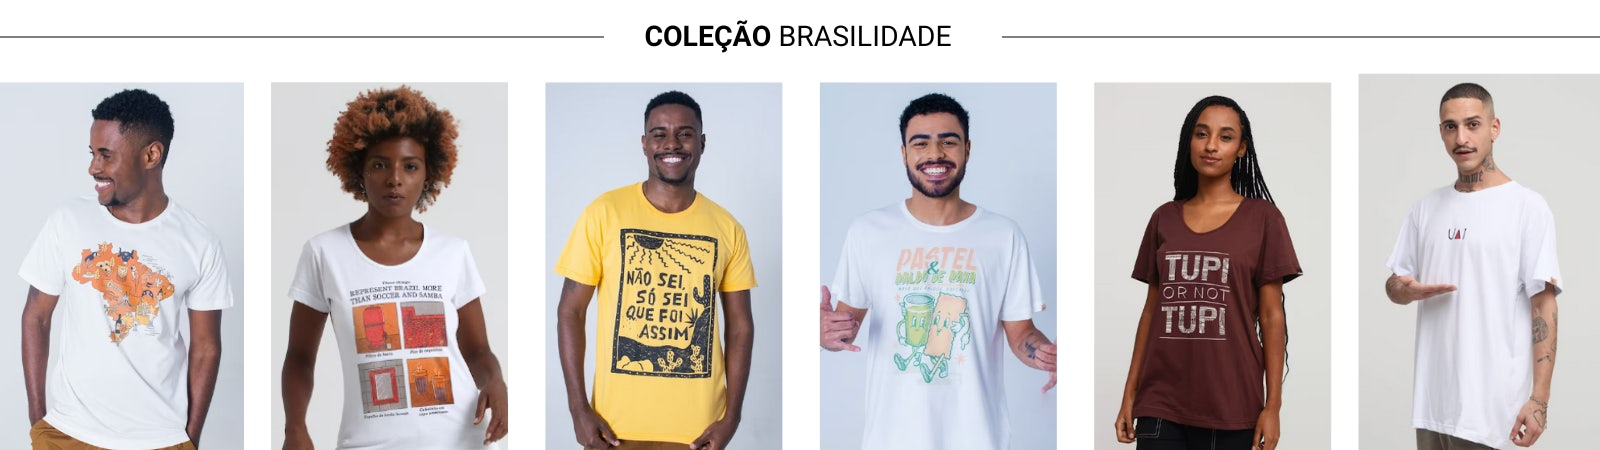 camiseras-cultura-brasileira-1